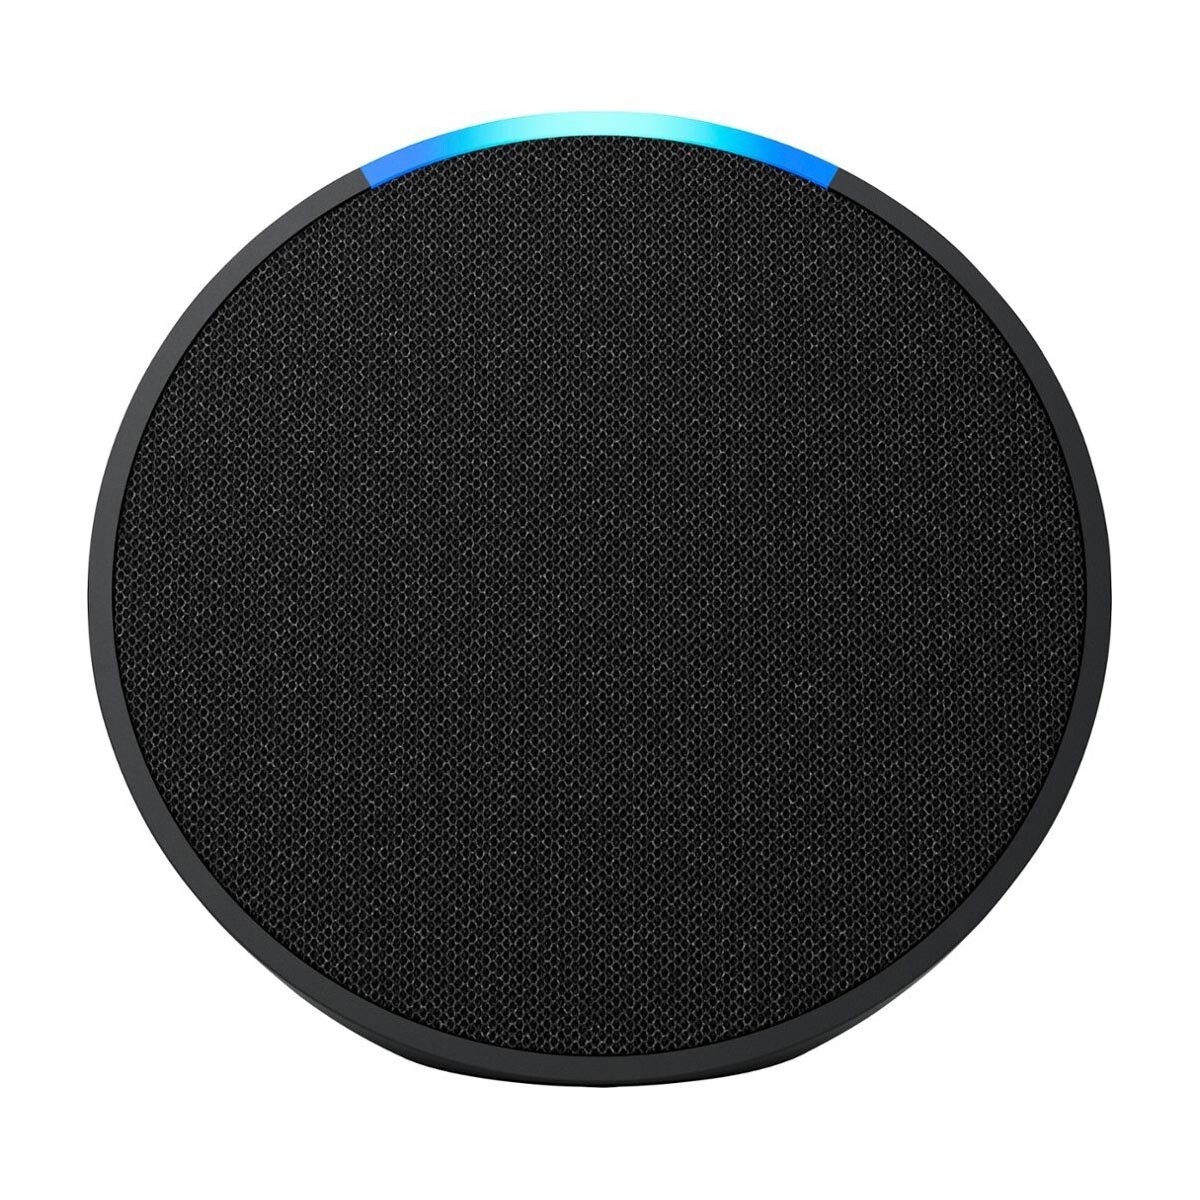 Parlante Smart Amazon Echo Pop (1st Gen) C/ Asistente Virtual Alexa Charcoal